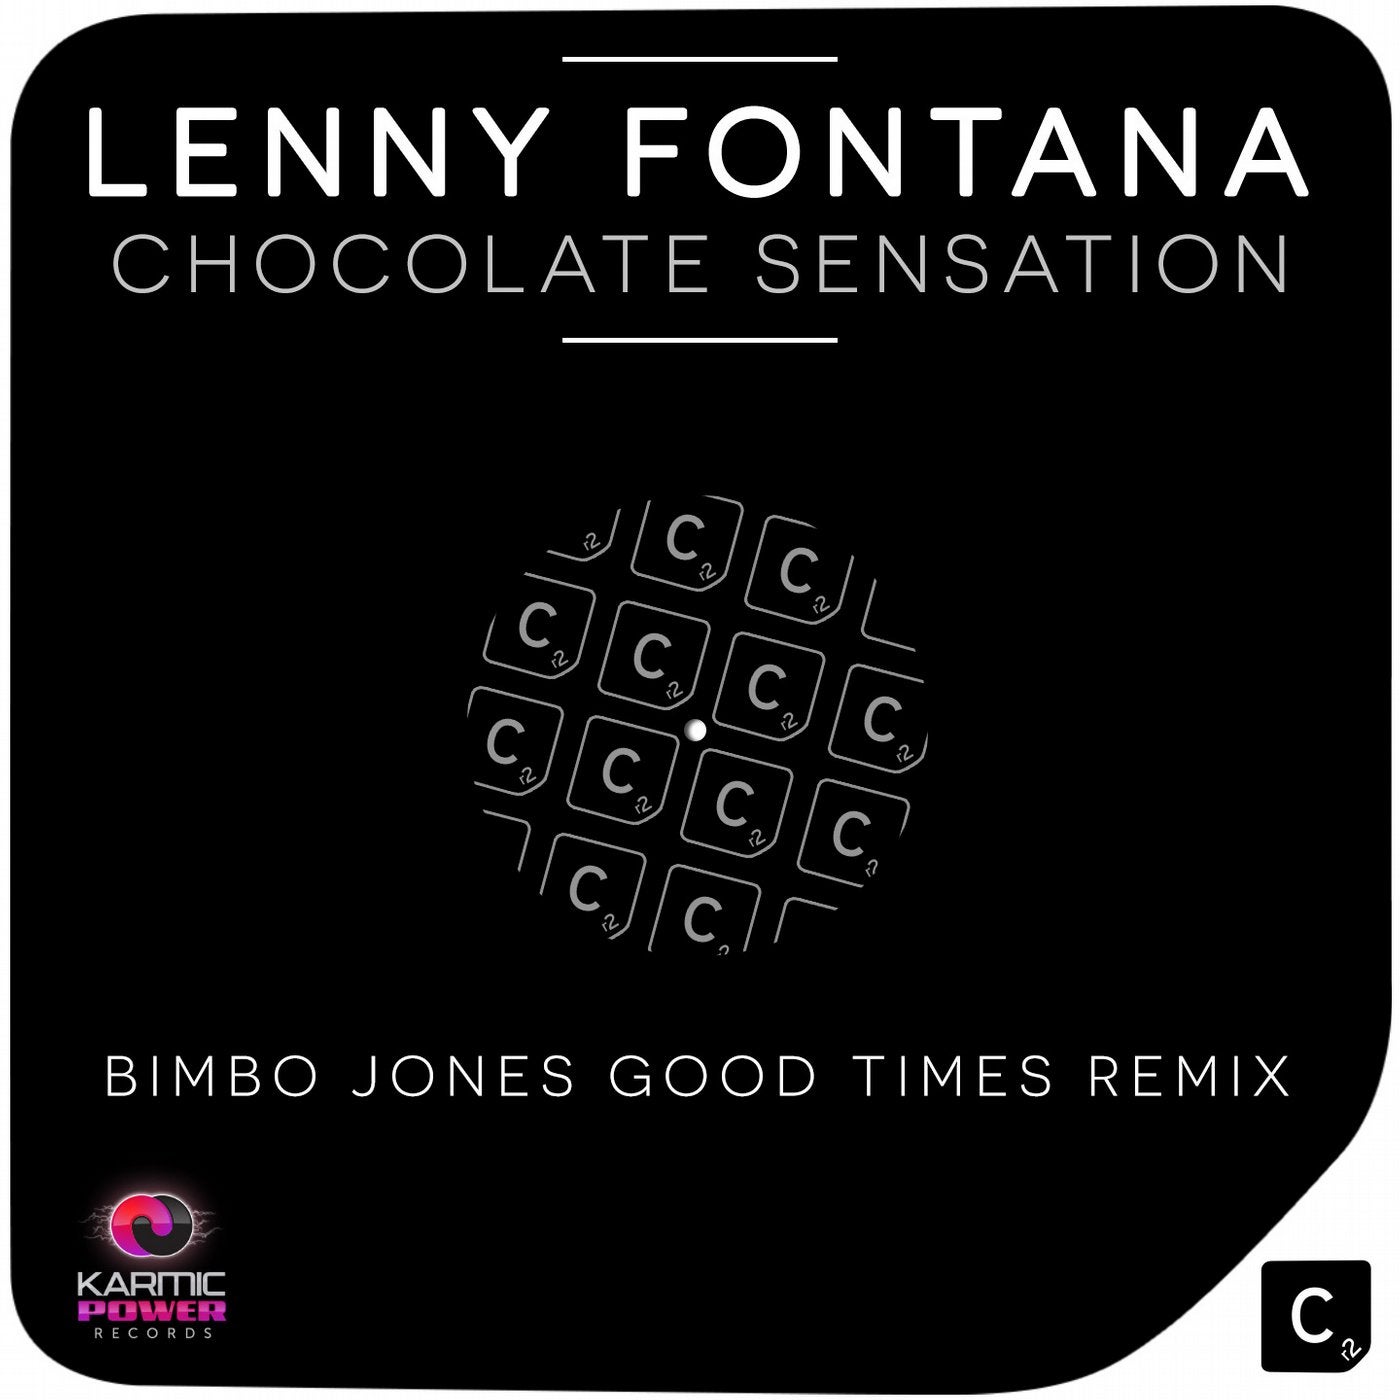 Chocolate Sensation (Bimbo Jones Good Times Remix)